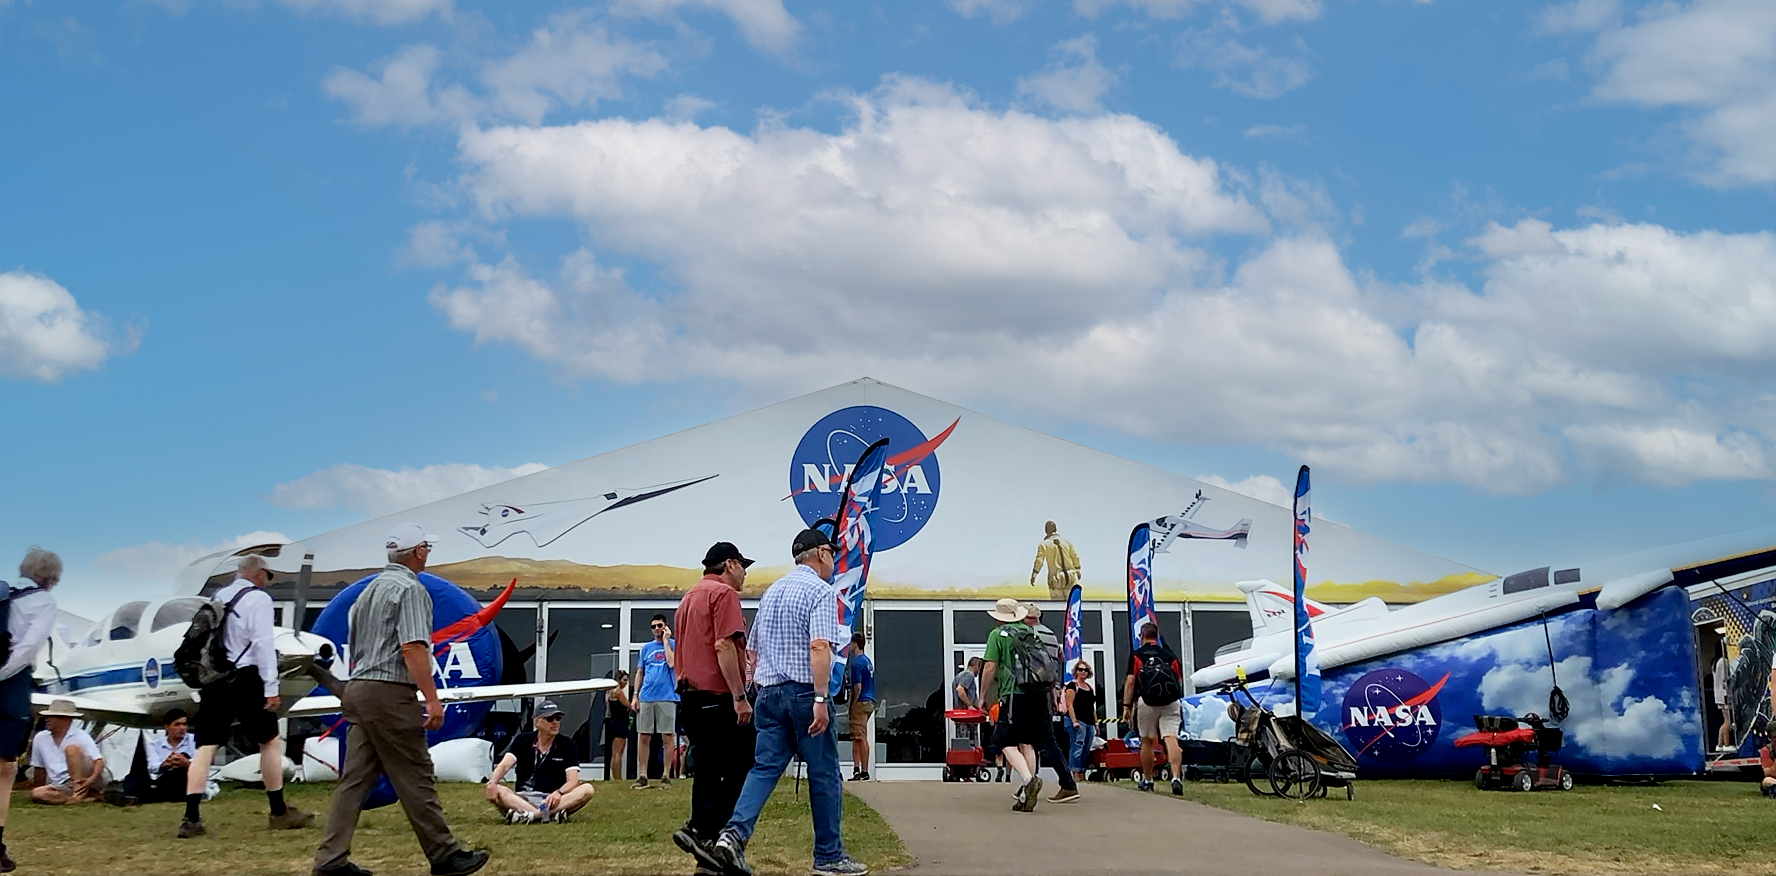 The NASA Pavilion at Oshkosh from 2019.